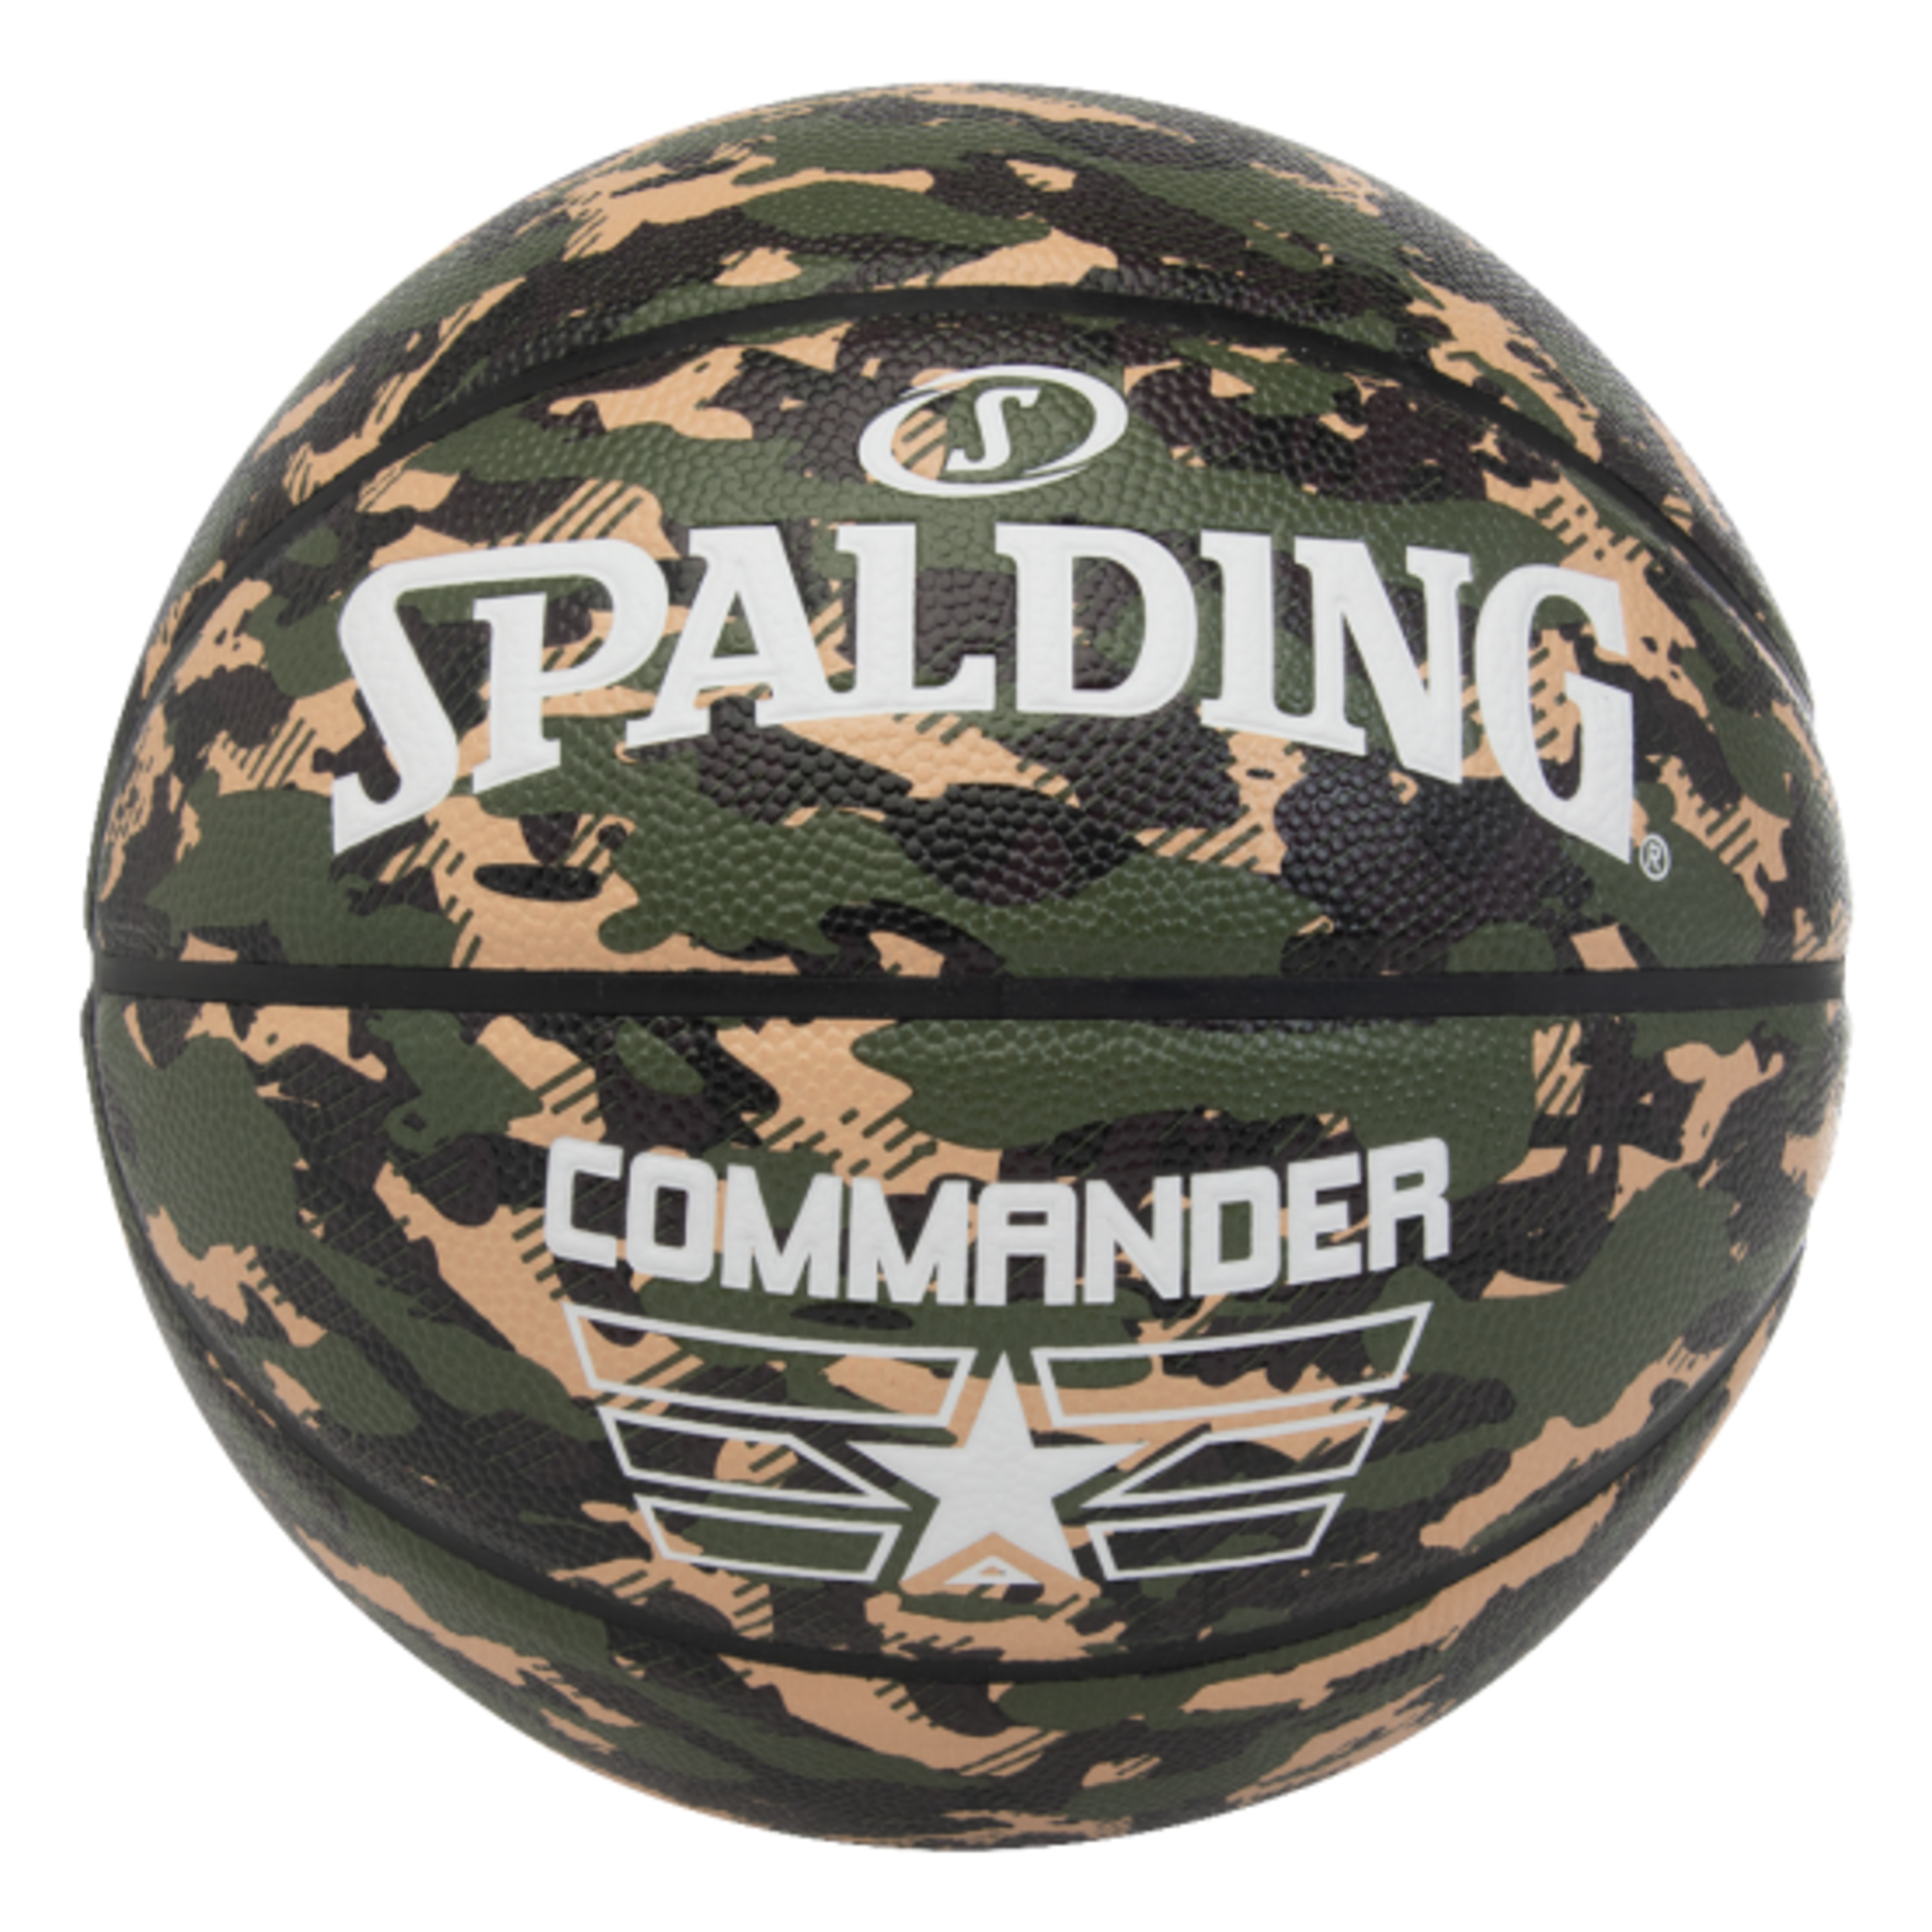 Balón De Baloncesto Spalding Commander Camo Sz7 - camuflaje - 